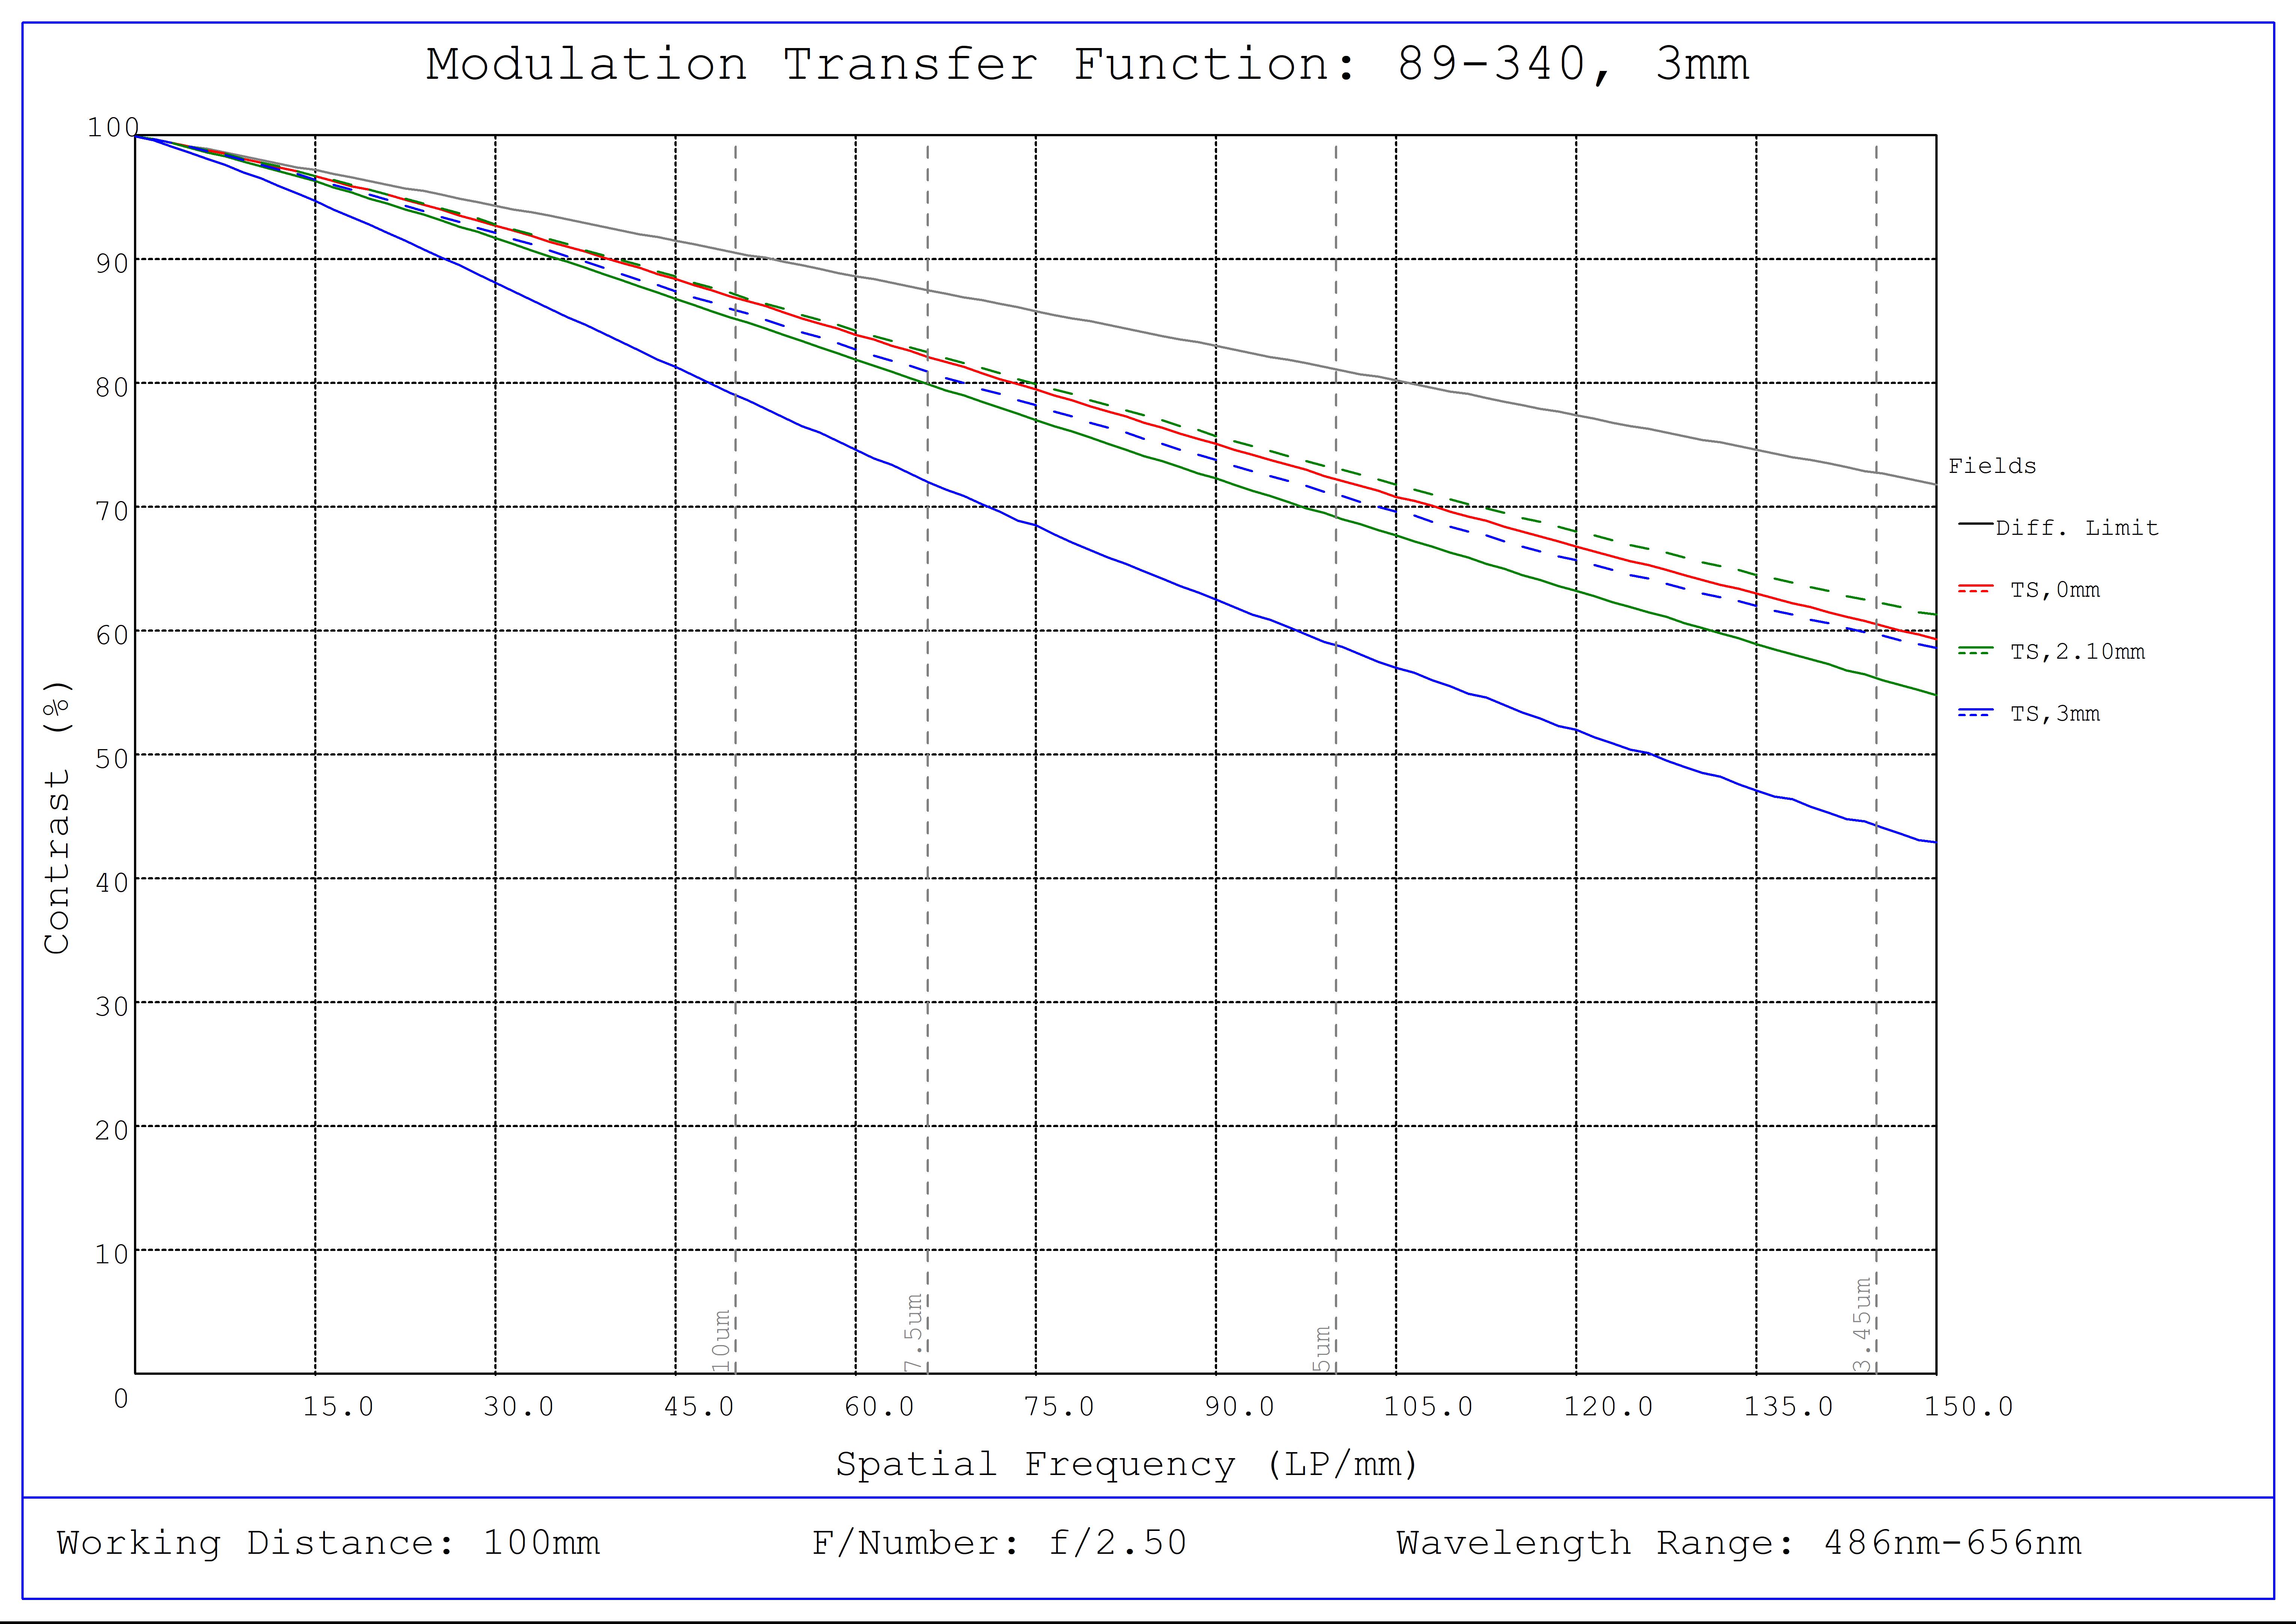 #20-055, 3mm FL f/2.5, IR-Cut Blue Series M12 Lens, Modulated Transfer Function (MTF) Plot, 100mm Working Distance, f2.5